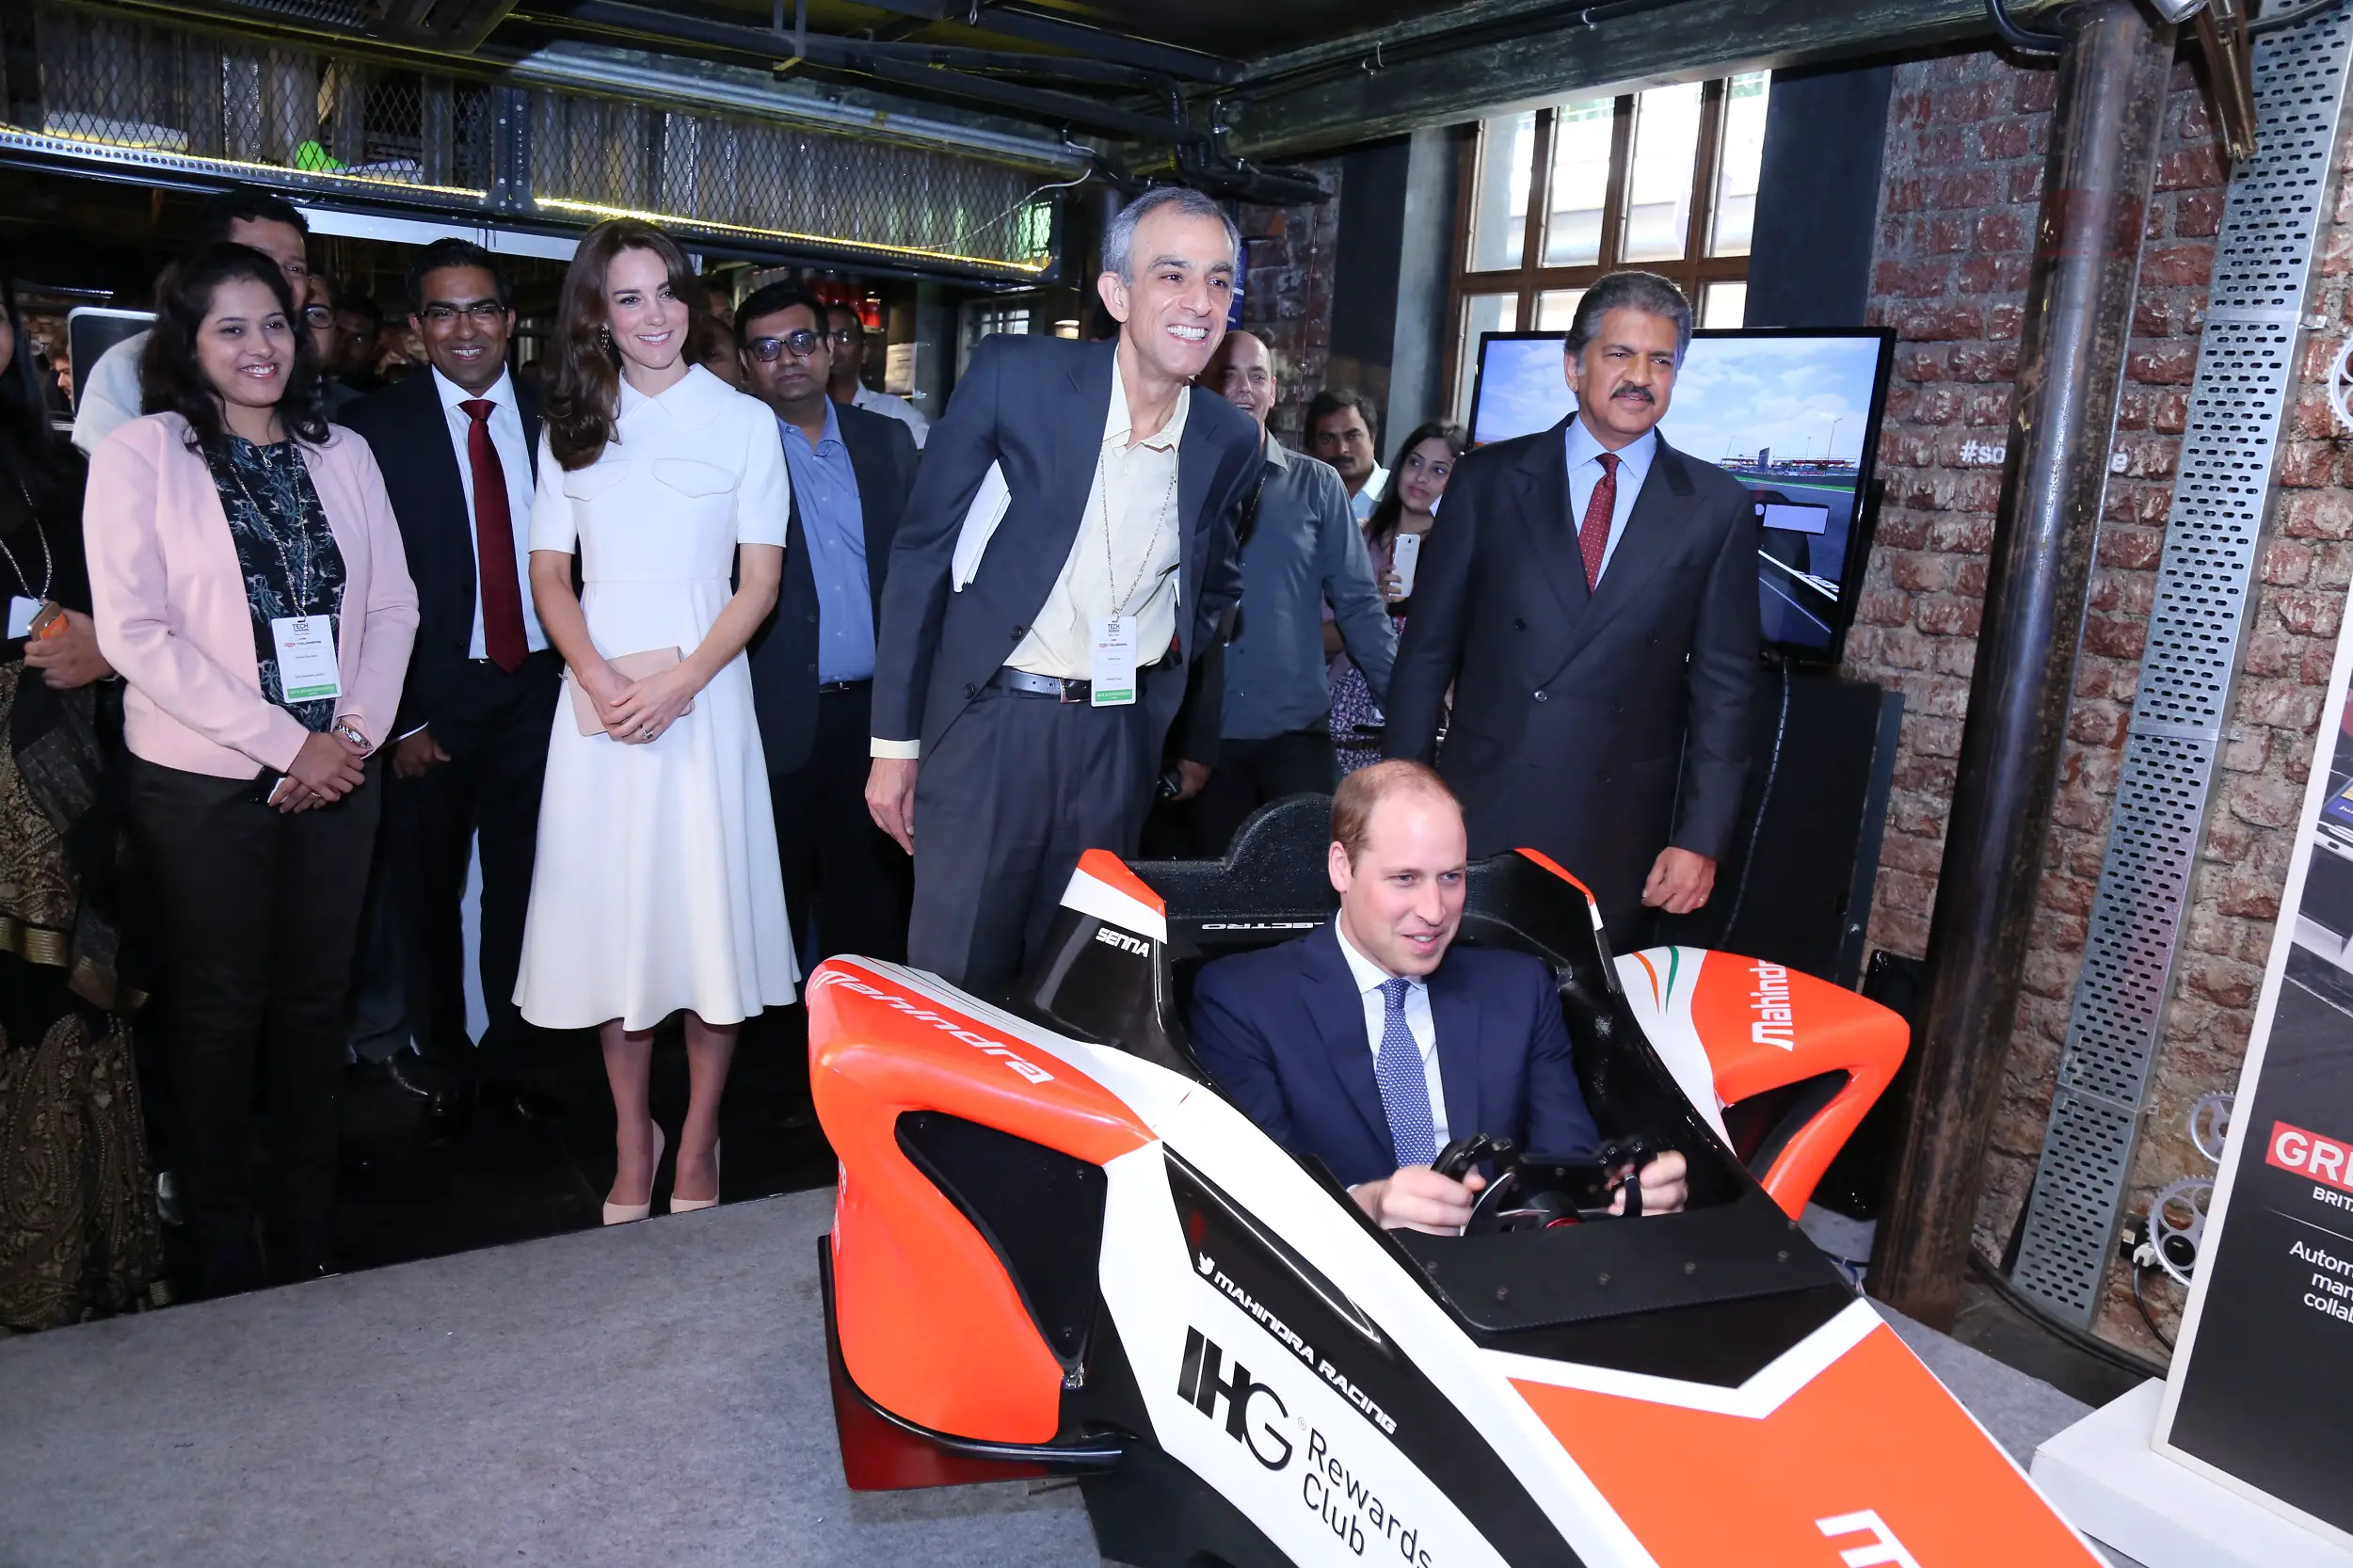 The Duke of Cambridge enjoyed a formula one car ride on the day 2 of India visit